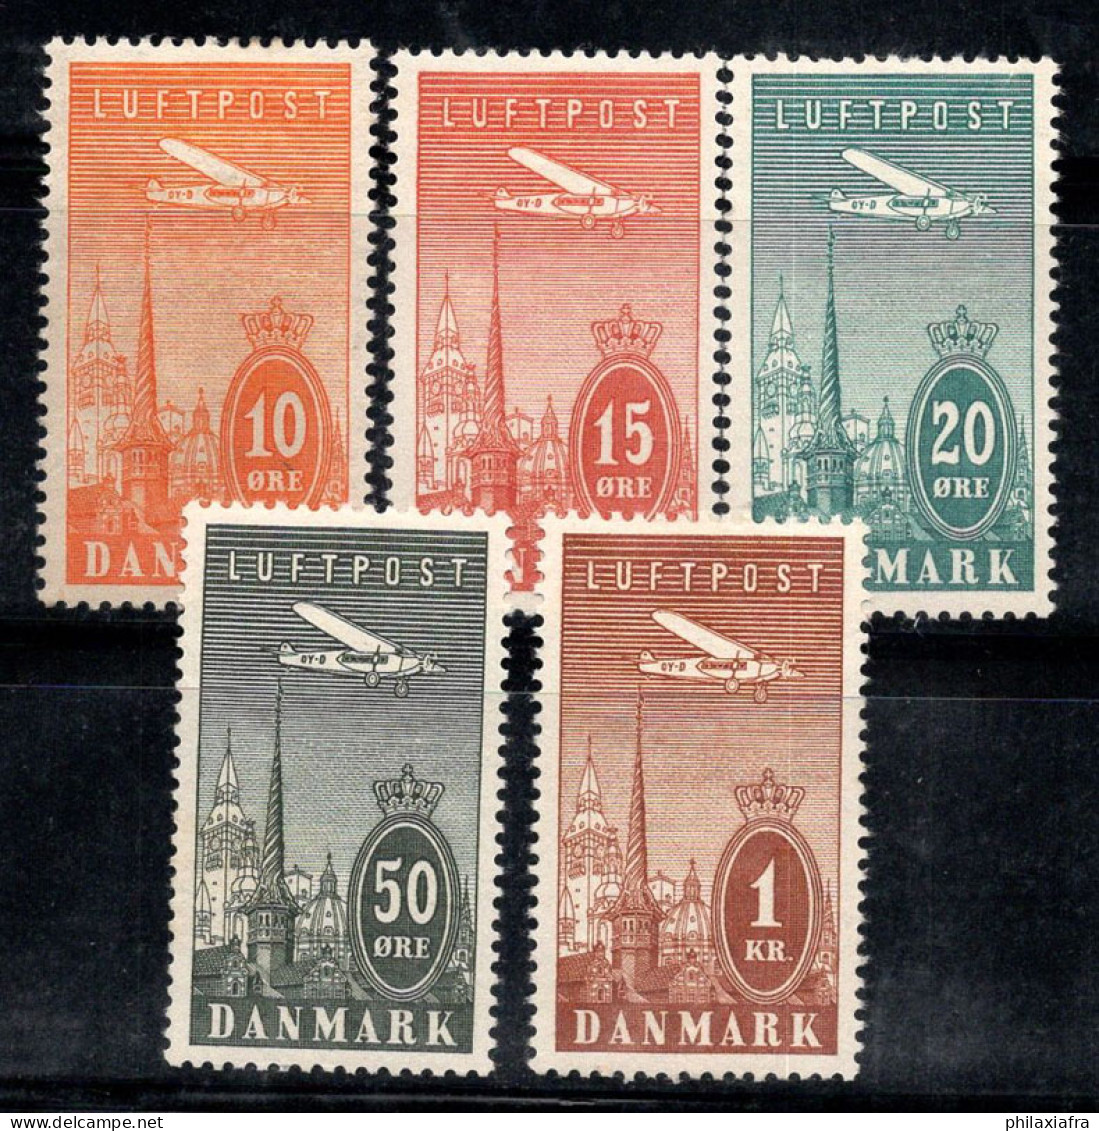 Danemark 1934 Mi. 217-221 Neuf * MH 100% Poste Aérienne - Posta Aerea